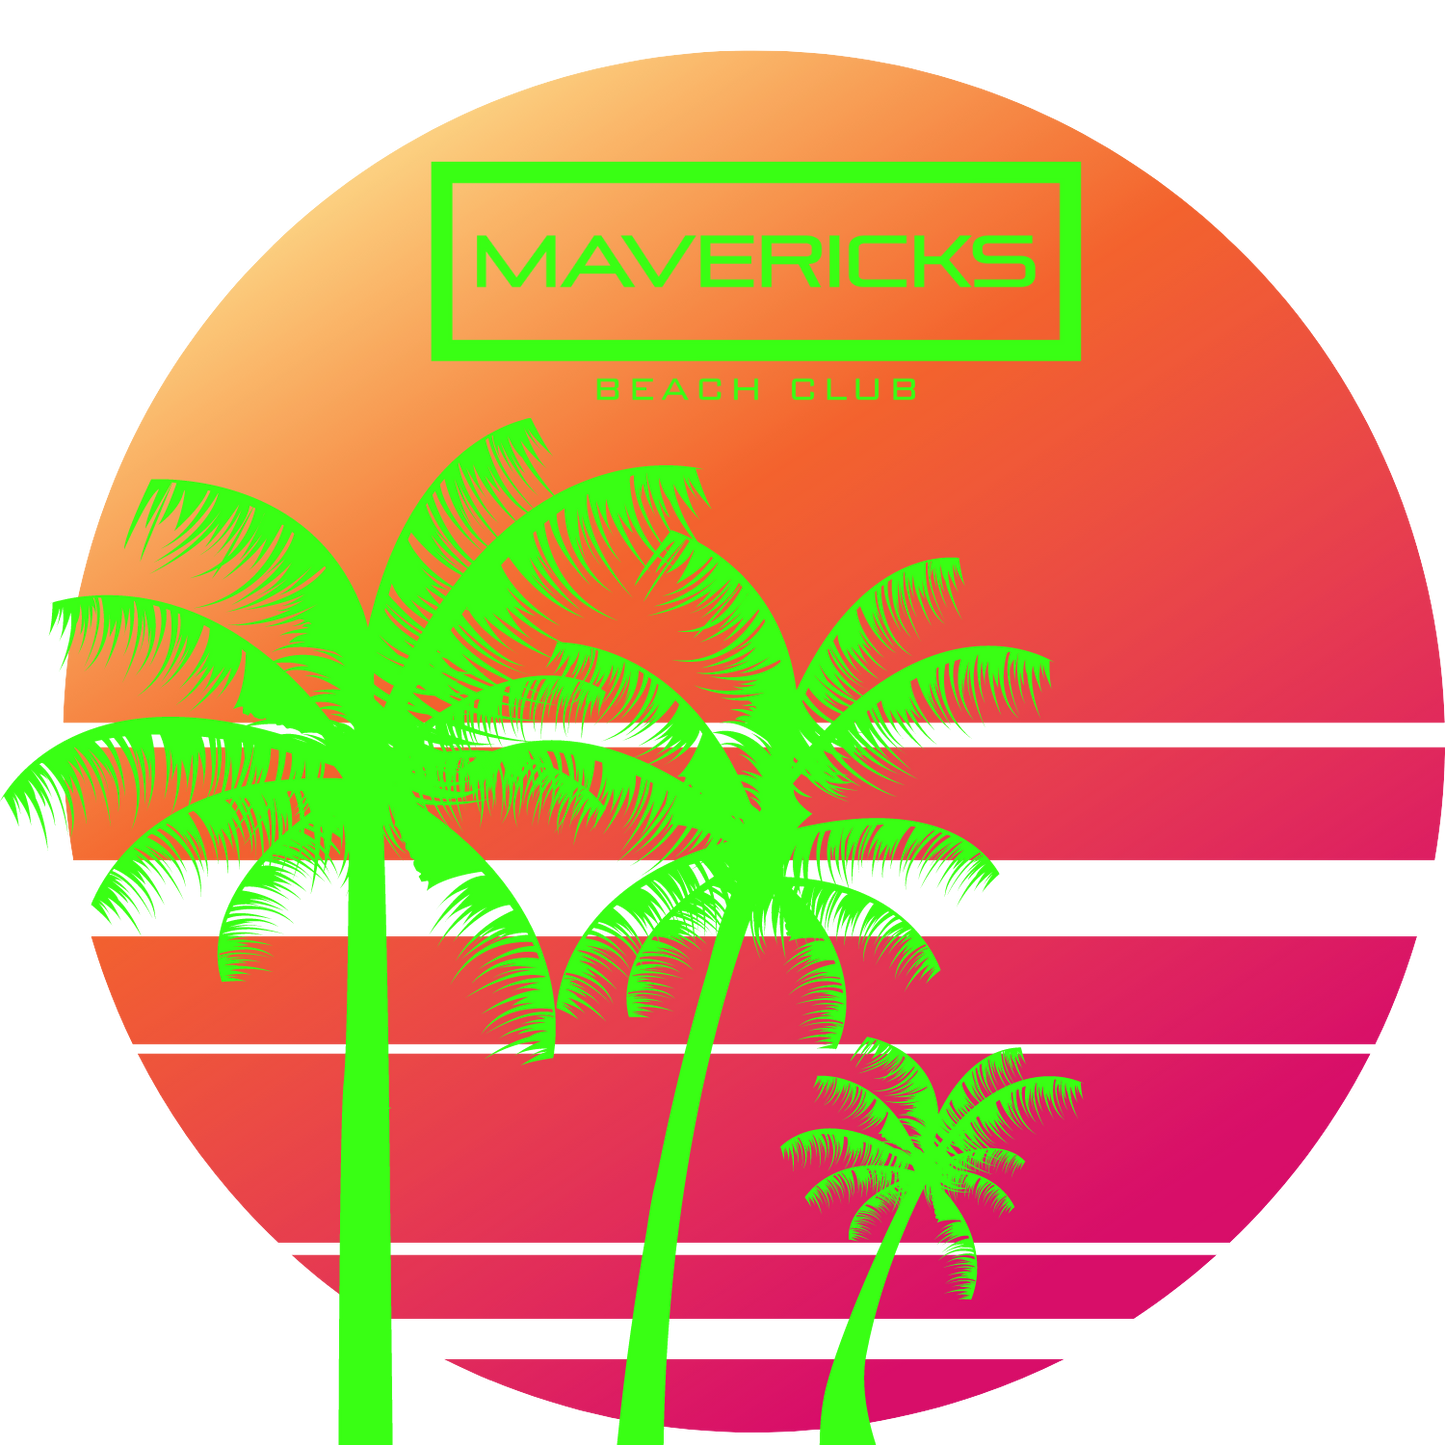 mavericks beach club merch, neon, neon collection, san diego, california